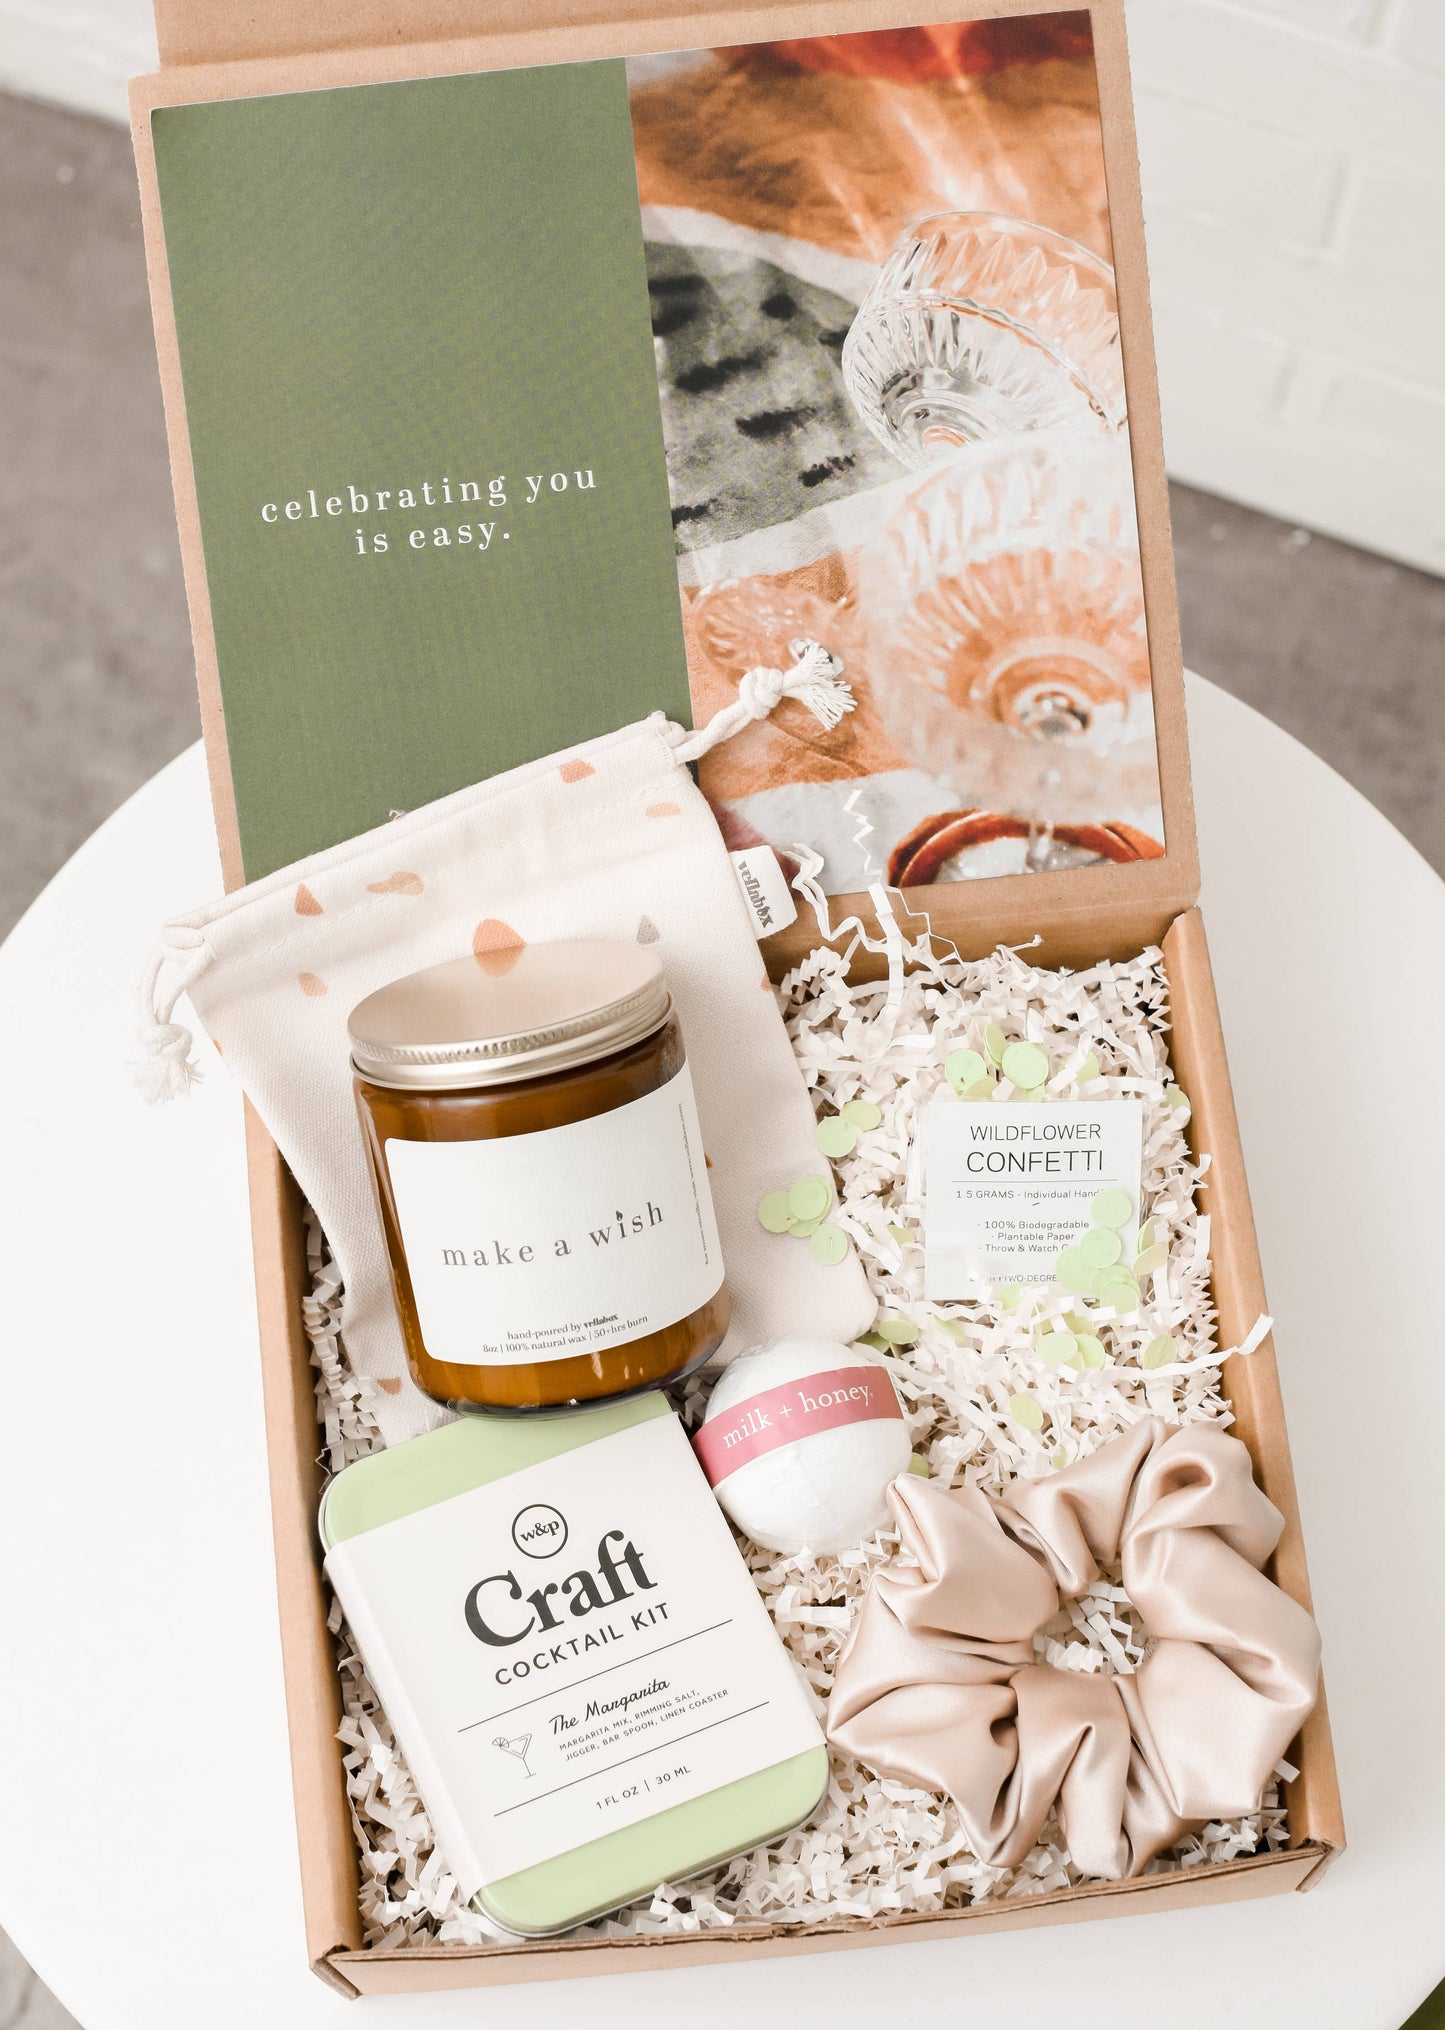 Vellabox - 'Make a Wish' Birthday Gift Box